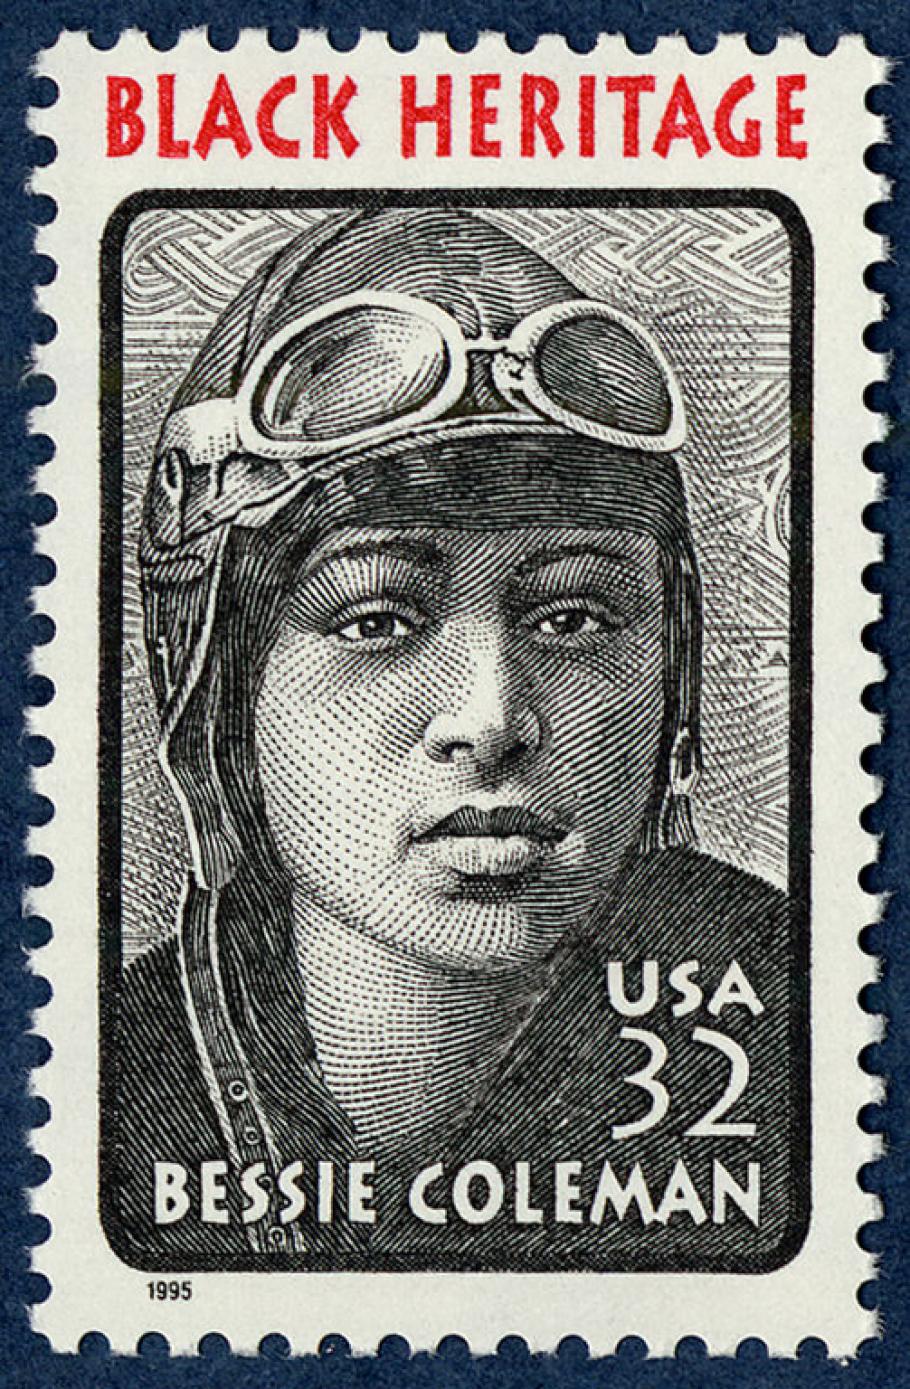 Bessie Coleman 'Black Heritage' postage stamp